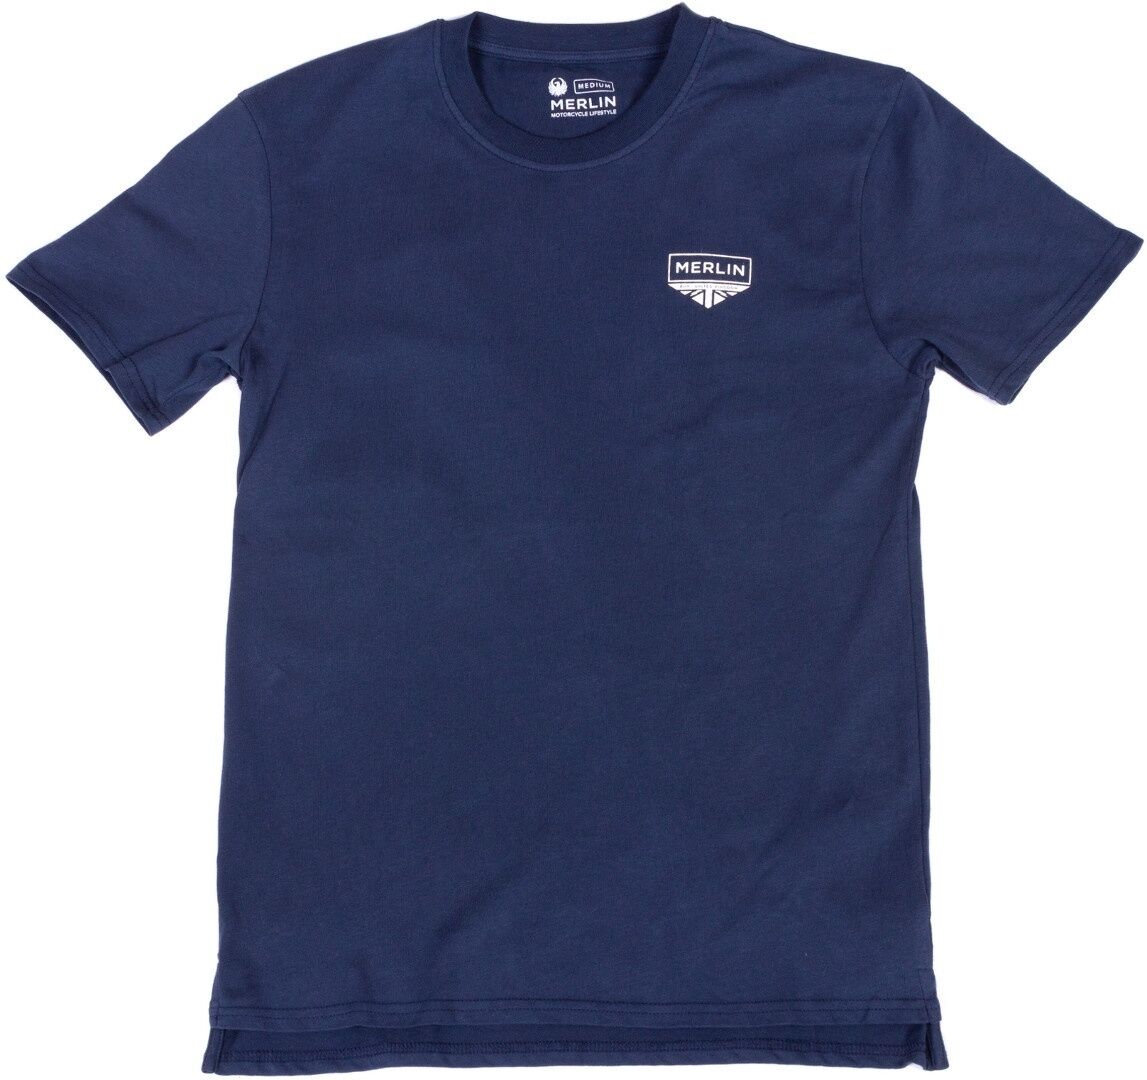 Merlin Truro Signature T-Shirt  - Blue